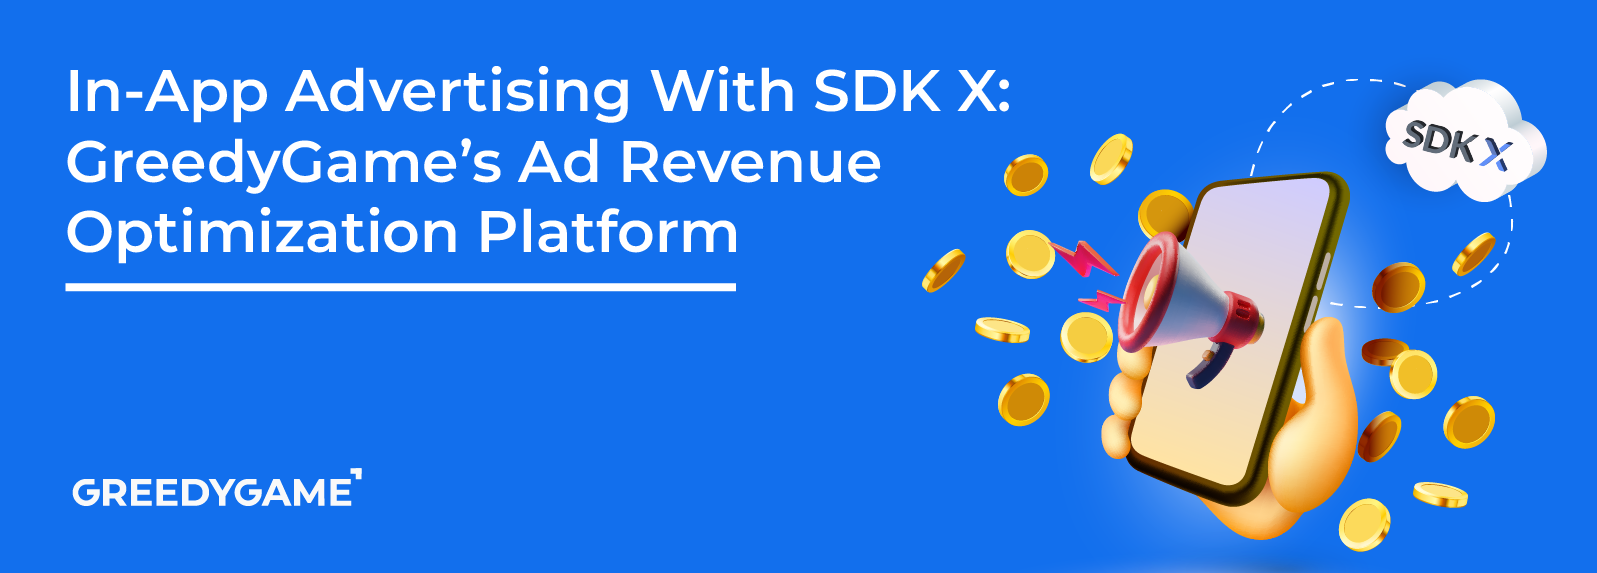 In-App Advertising With SDK X: GreedyGame’s Ad Revenue Optimization Platform